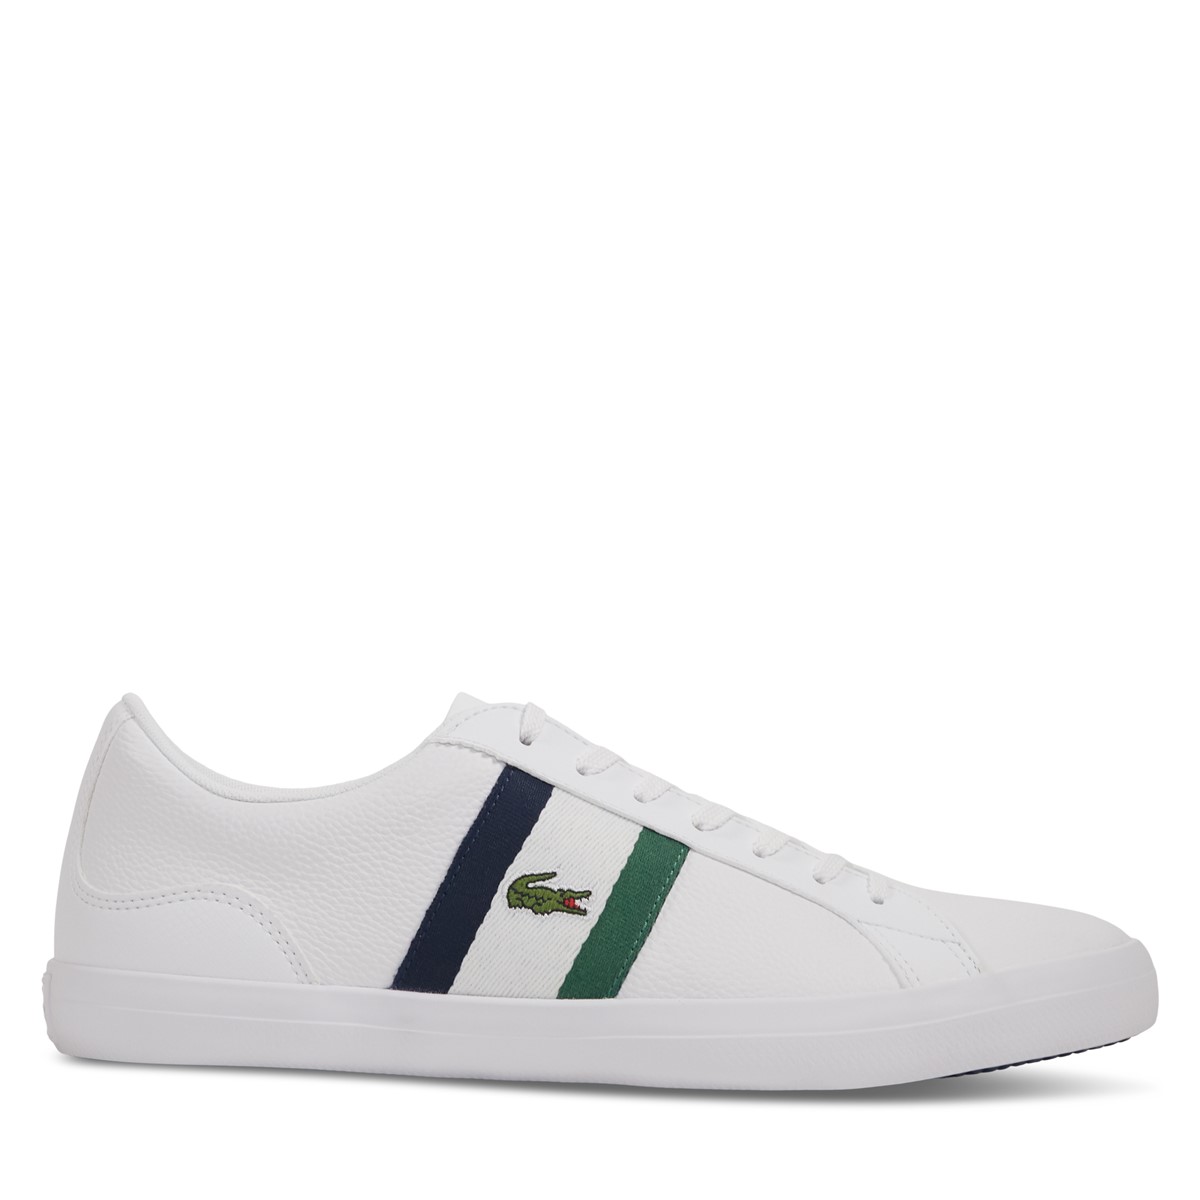 Men's Lerond Sneakers in White/Navy/Green